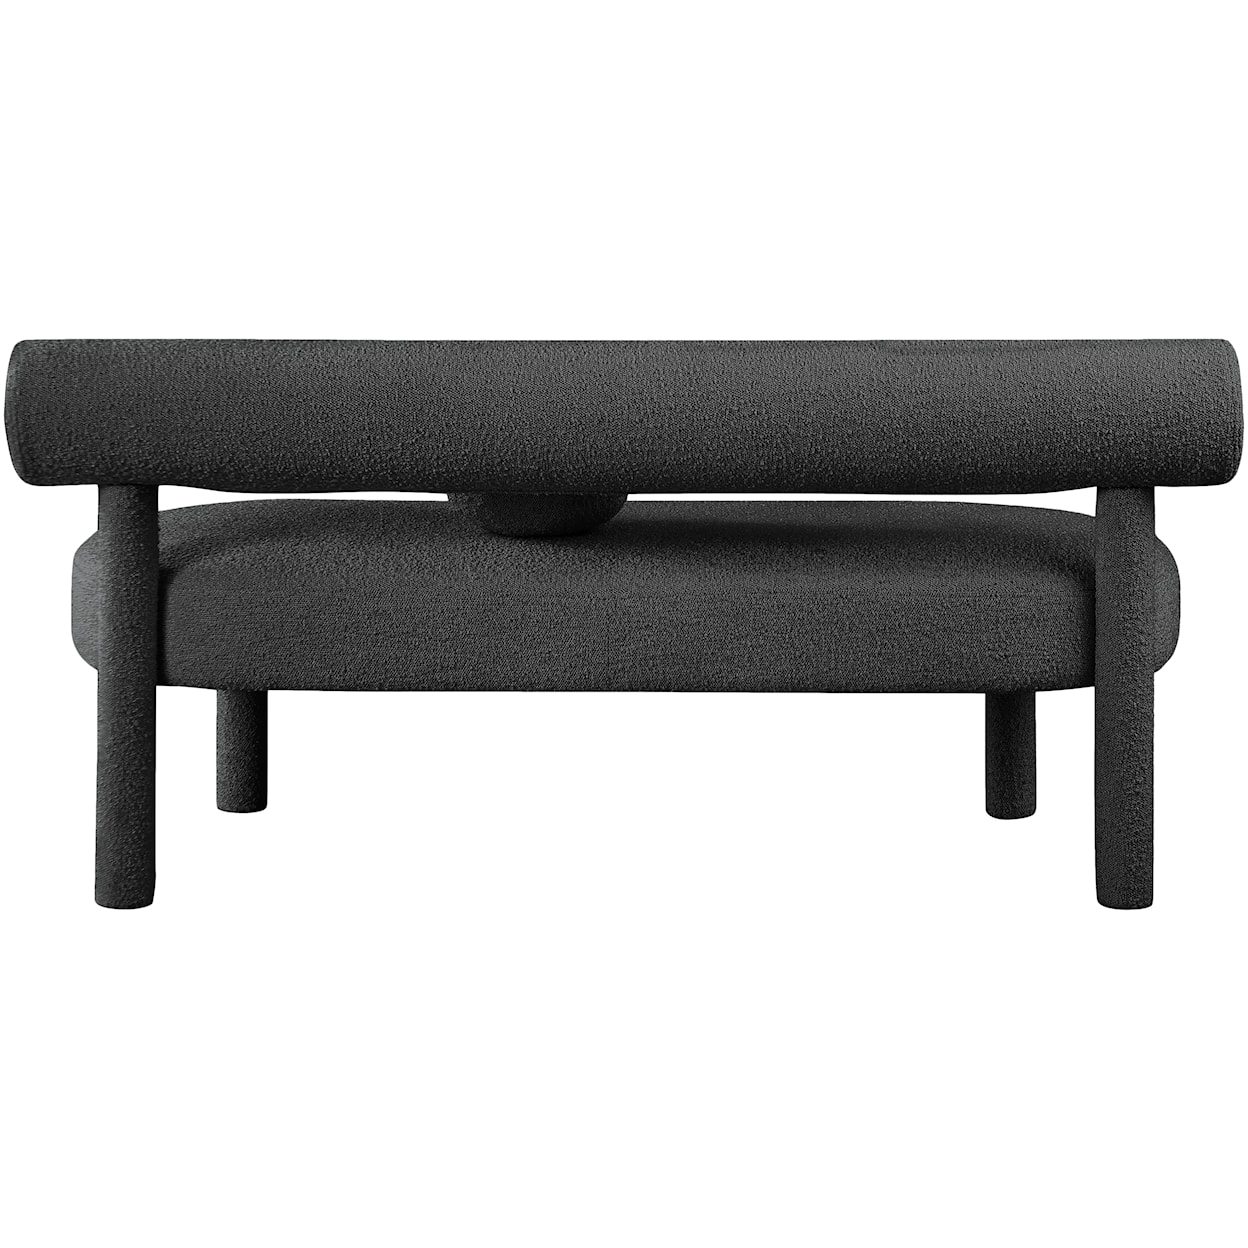 Meridian Furniture Parlor Bench